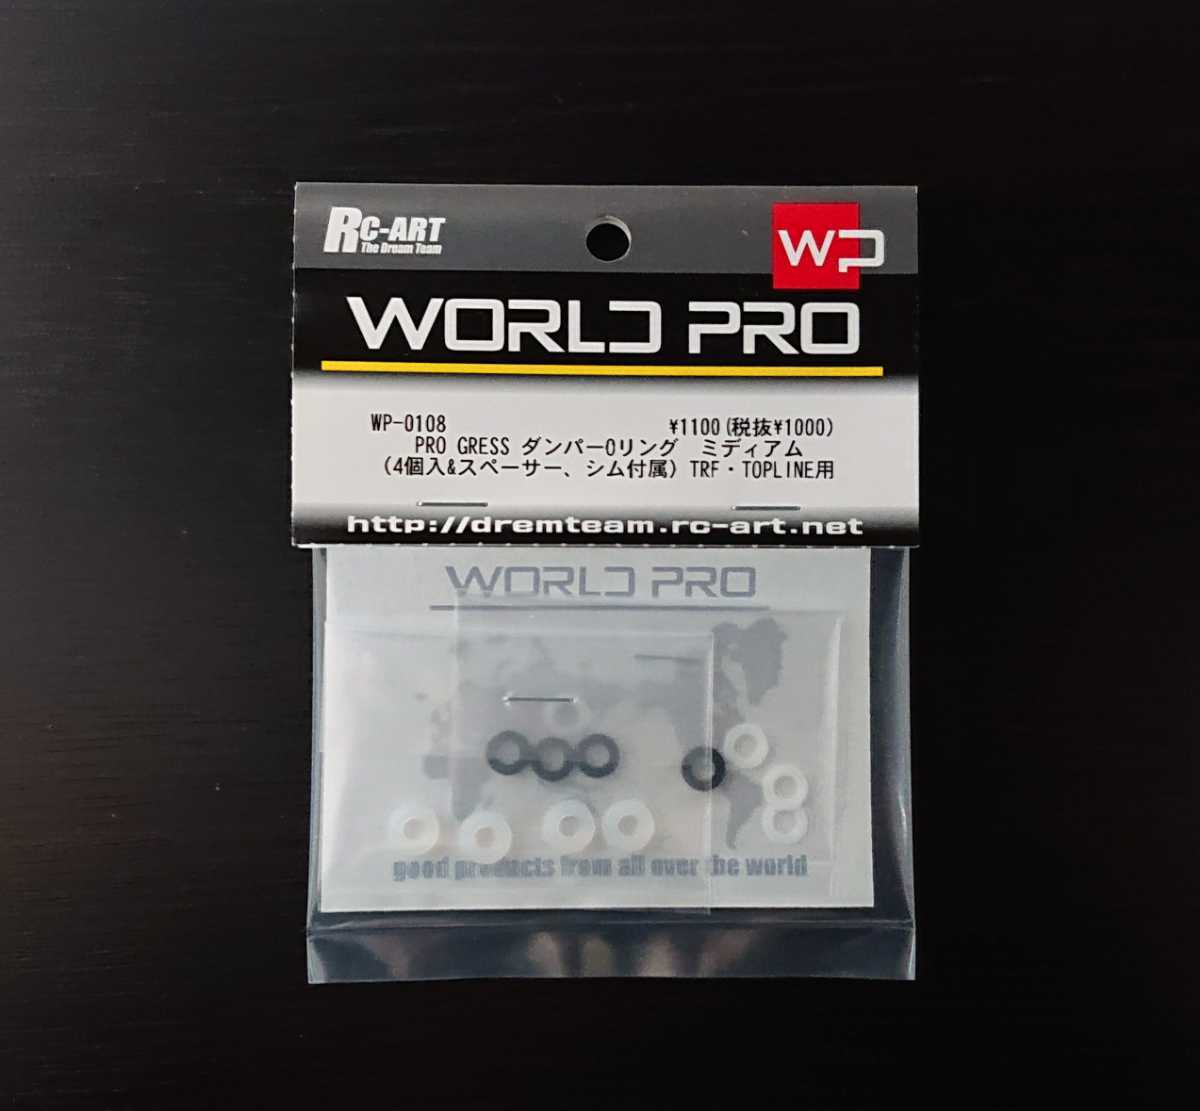 WP-0108 RC-ART WORLD PRO PRO GRESS ダンパーOリング ミディアム（4個入&スペーサー、シム付属）TRF・TOPLINE用 WORLDPRO ワールドプロ_画像1